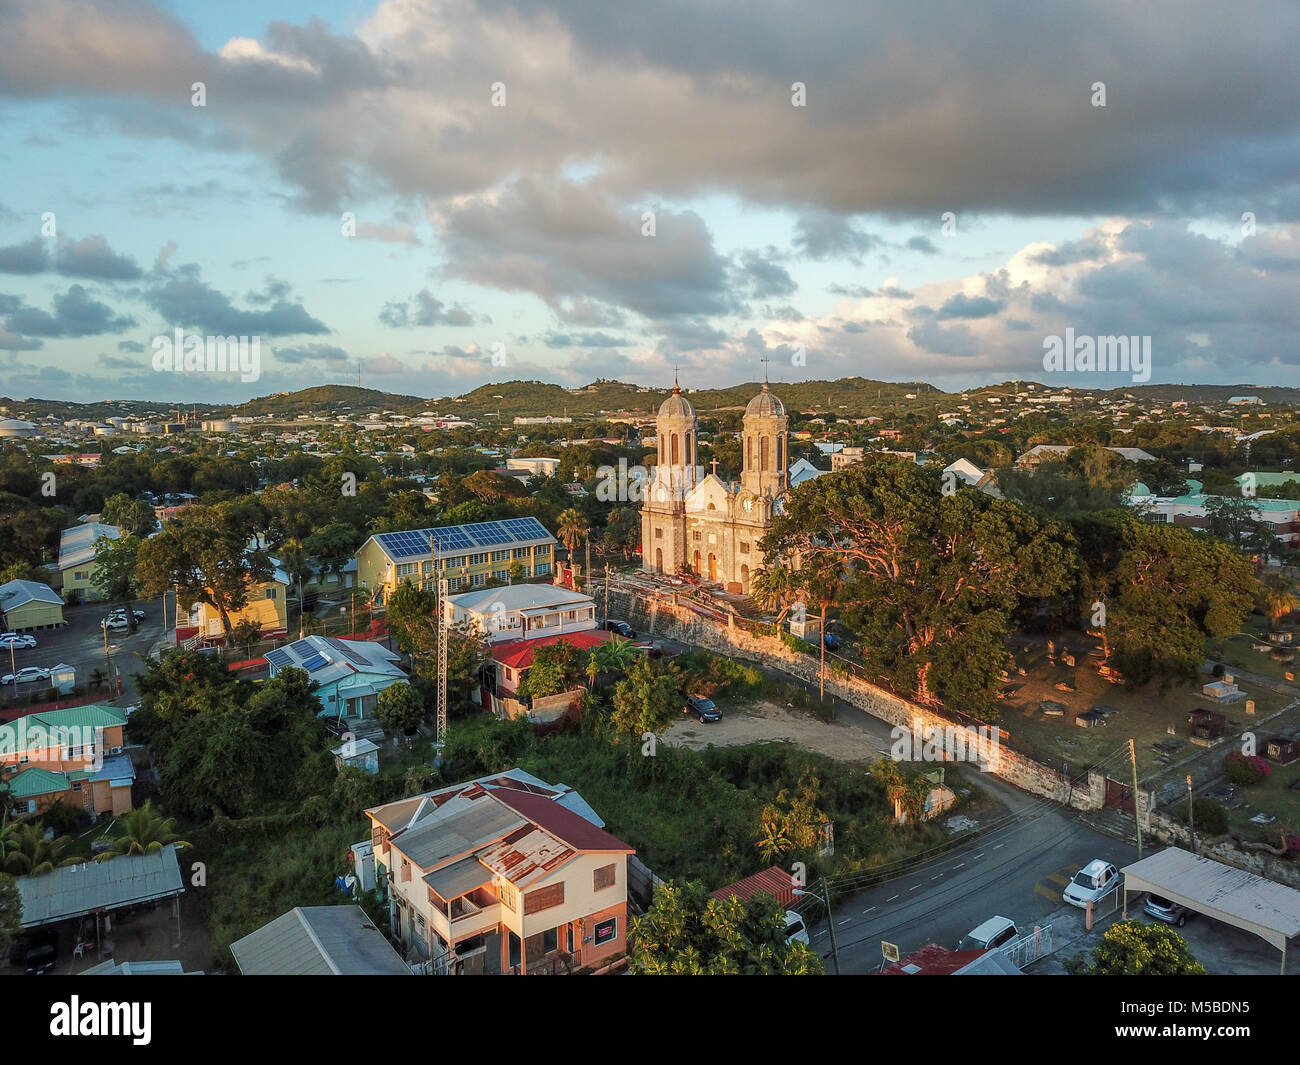 Saint John's Cathedral, St John's, Antigua Stock Photo